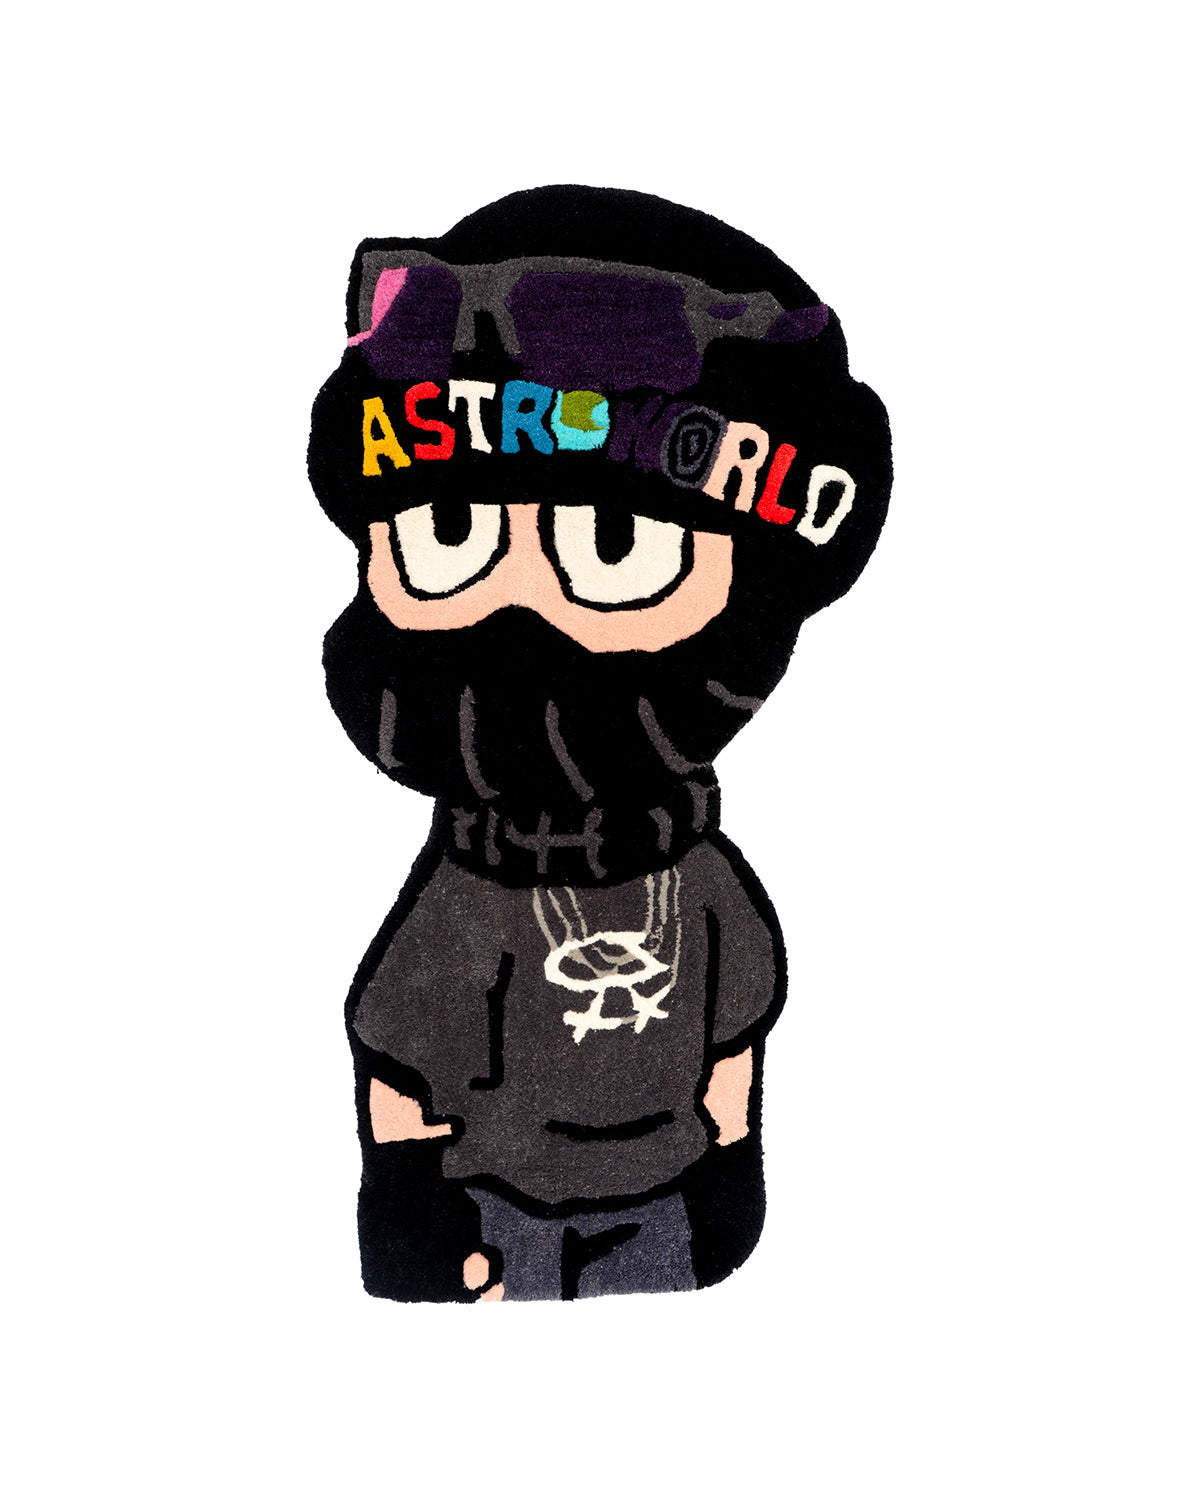 Astroboy Rug